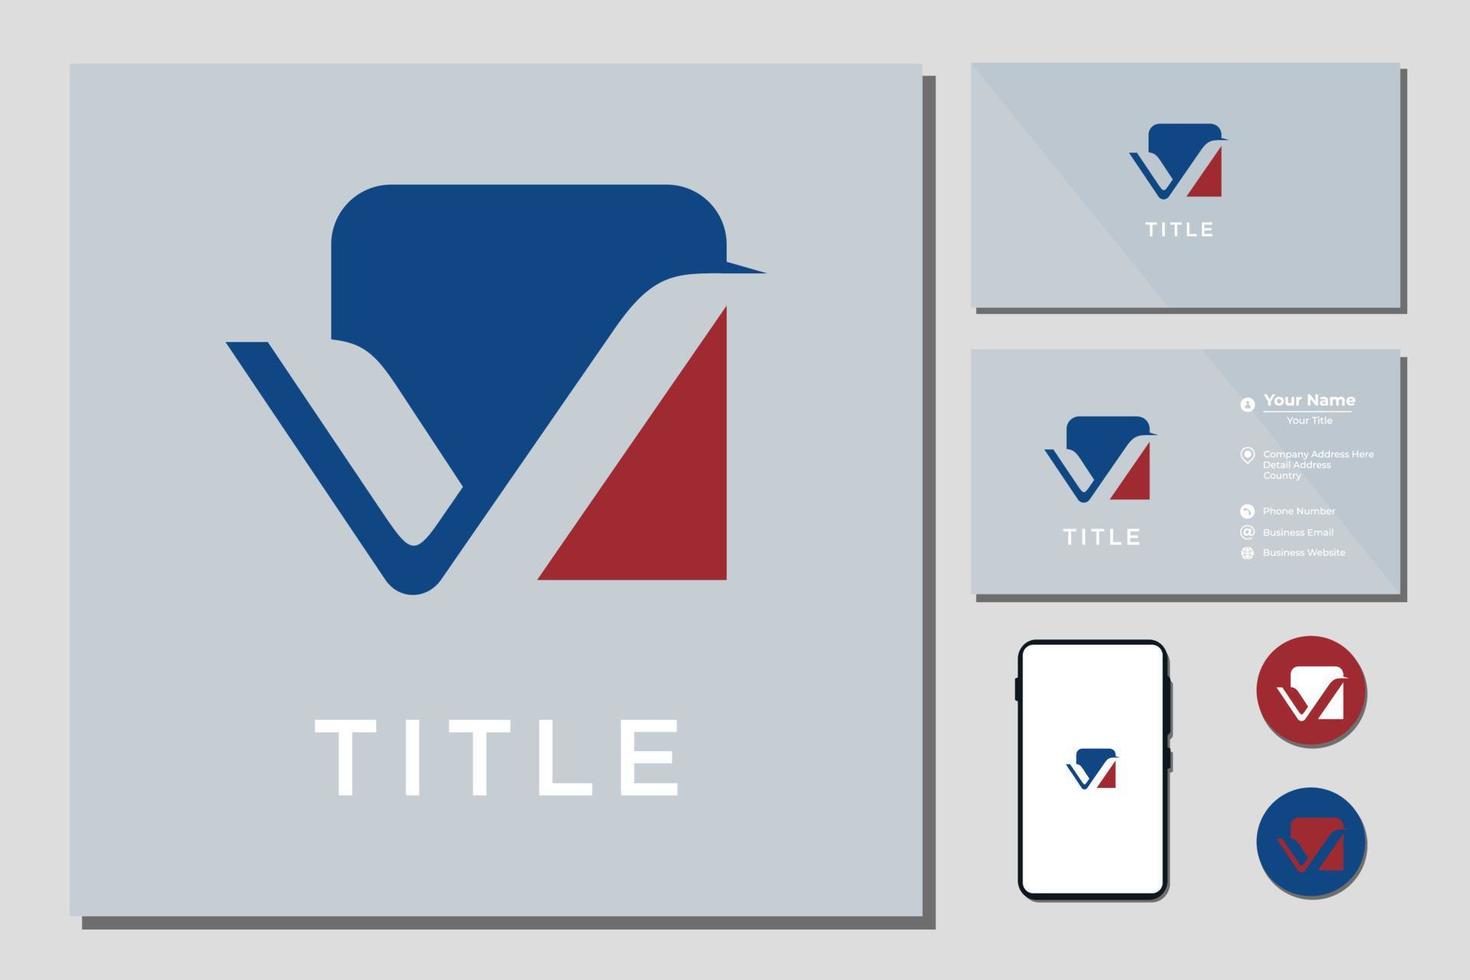 buchstabe v für logo-design-inspiration vektor